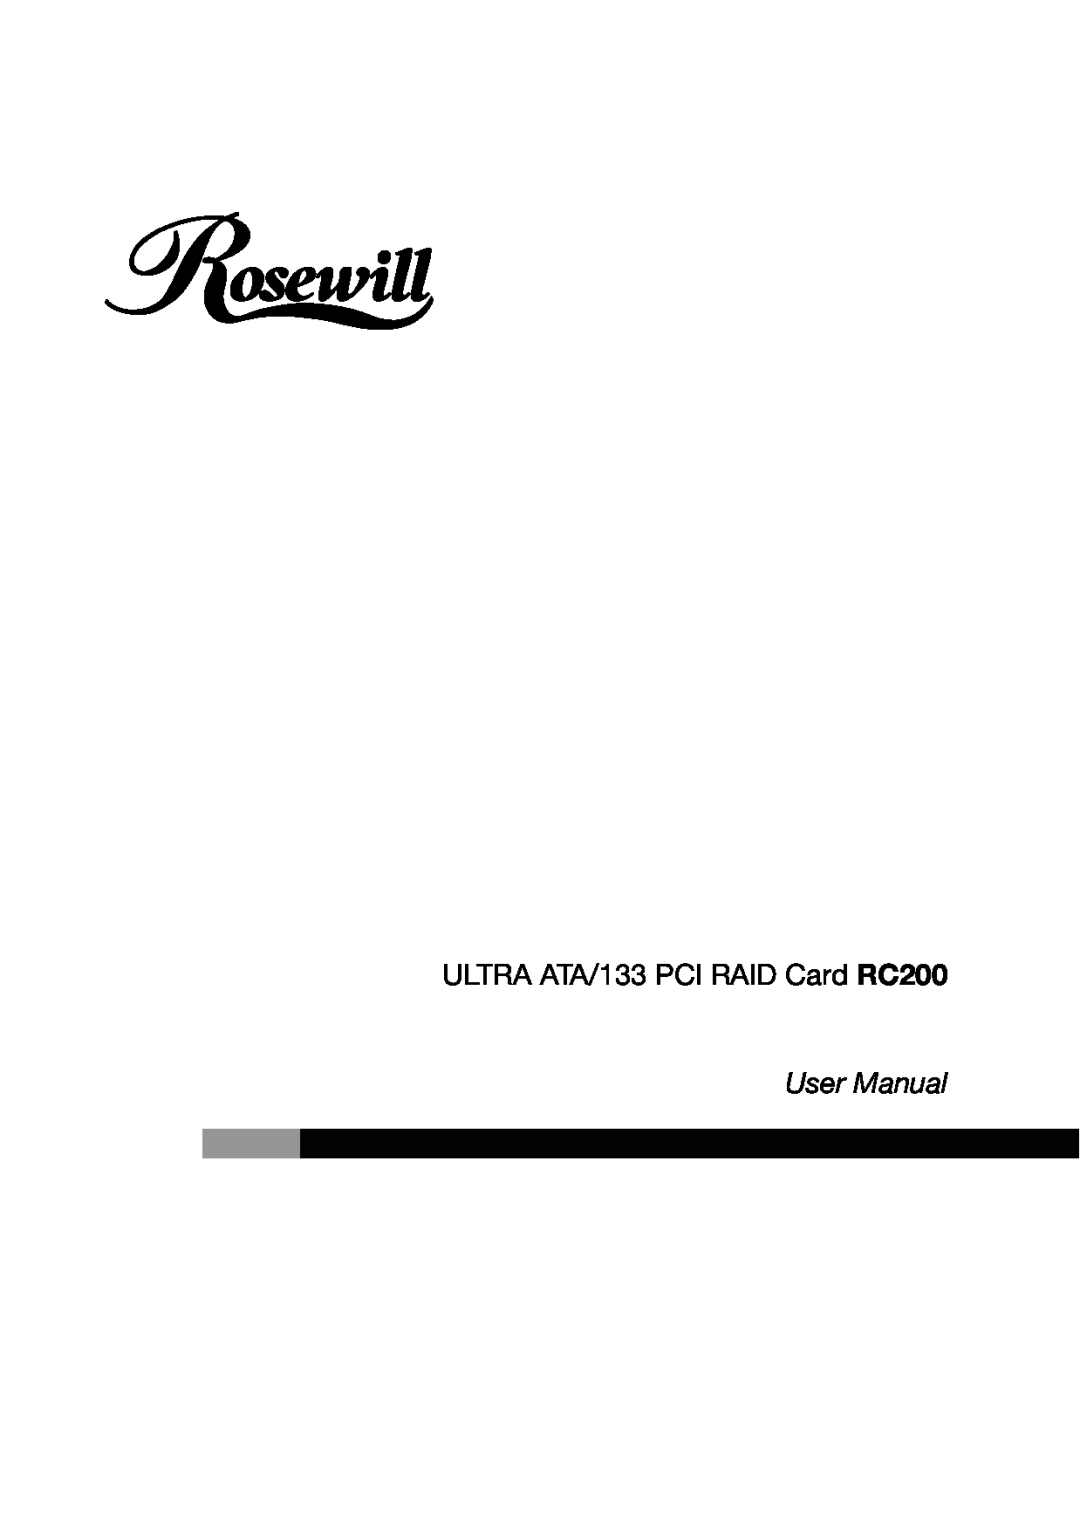 Rosewill user manual ULTRA ATA/133 PCI RAID Card RC200, User Manual 